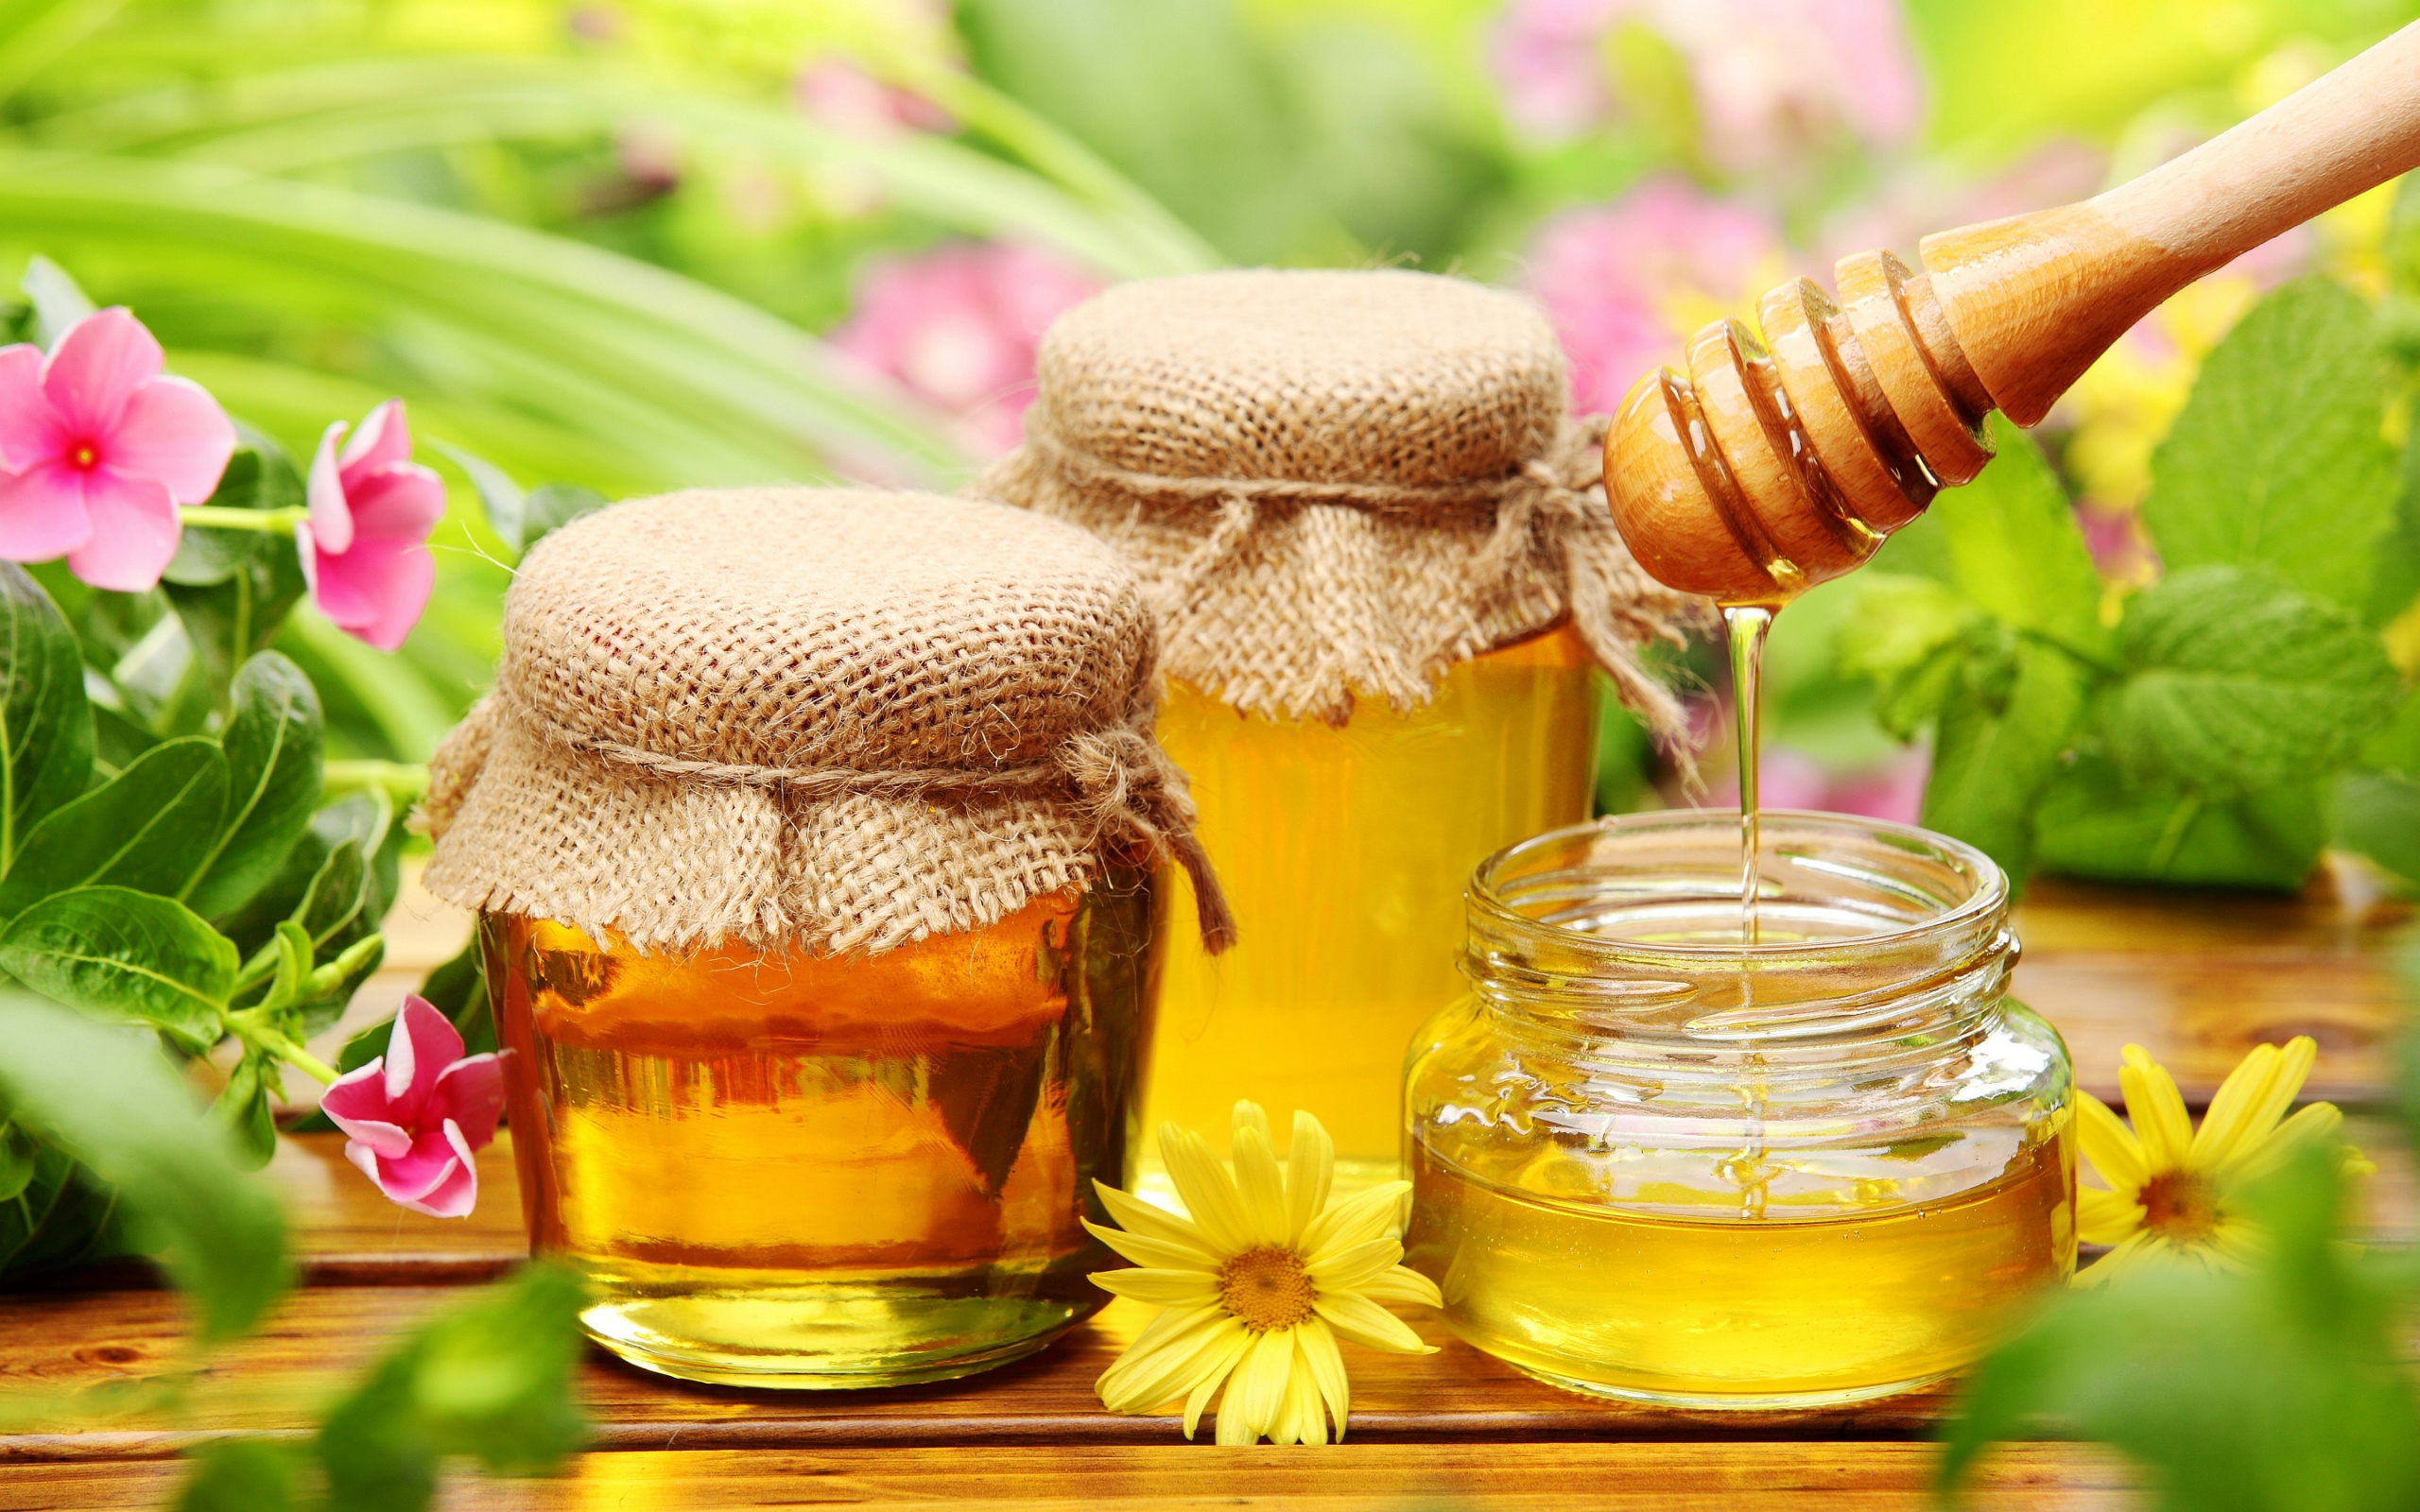 jars of honey with flowers